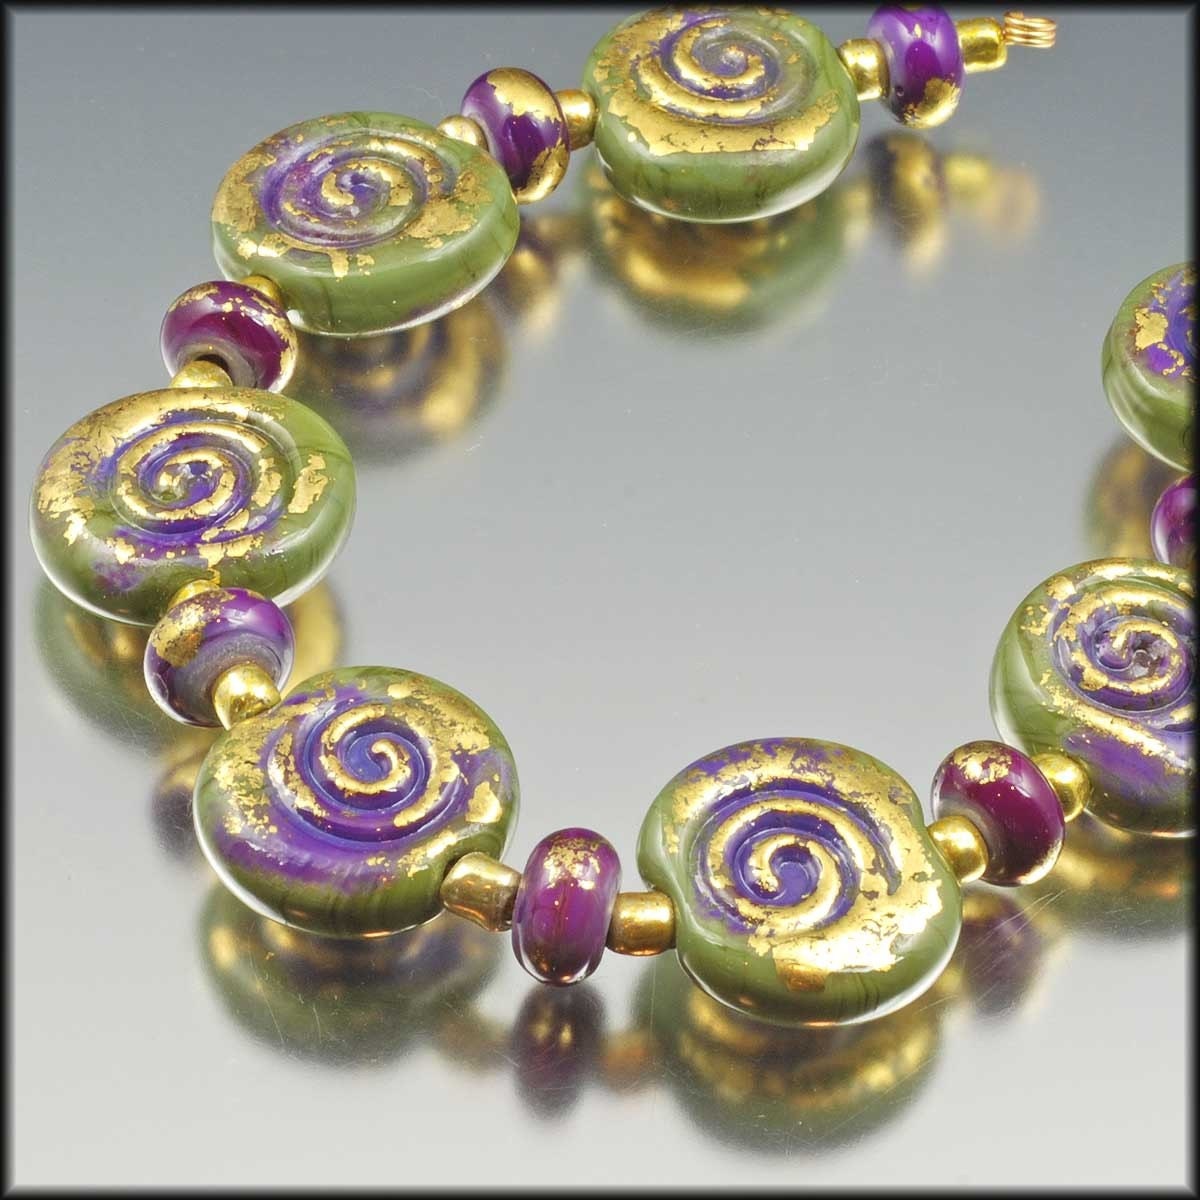 Aztec Olive - 15 lampwork beads by Judith Billig